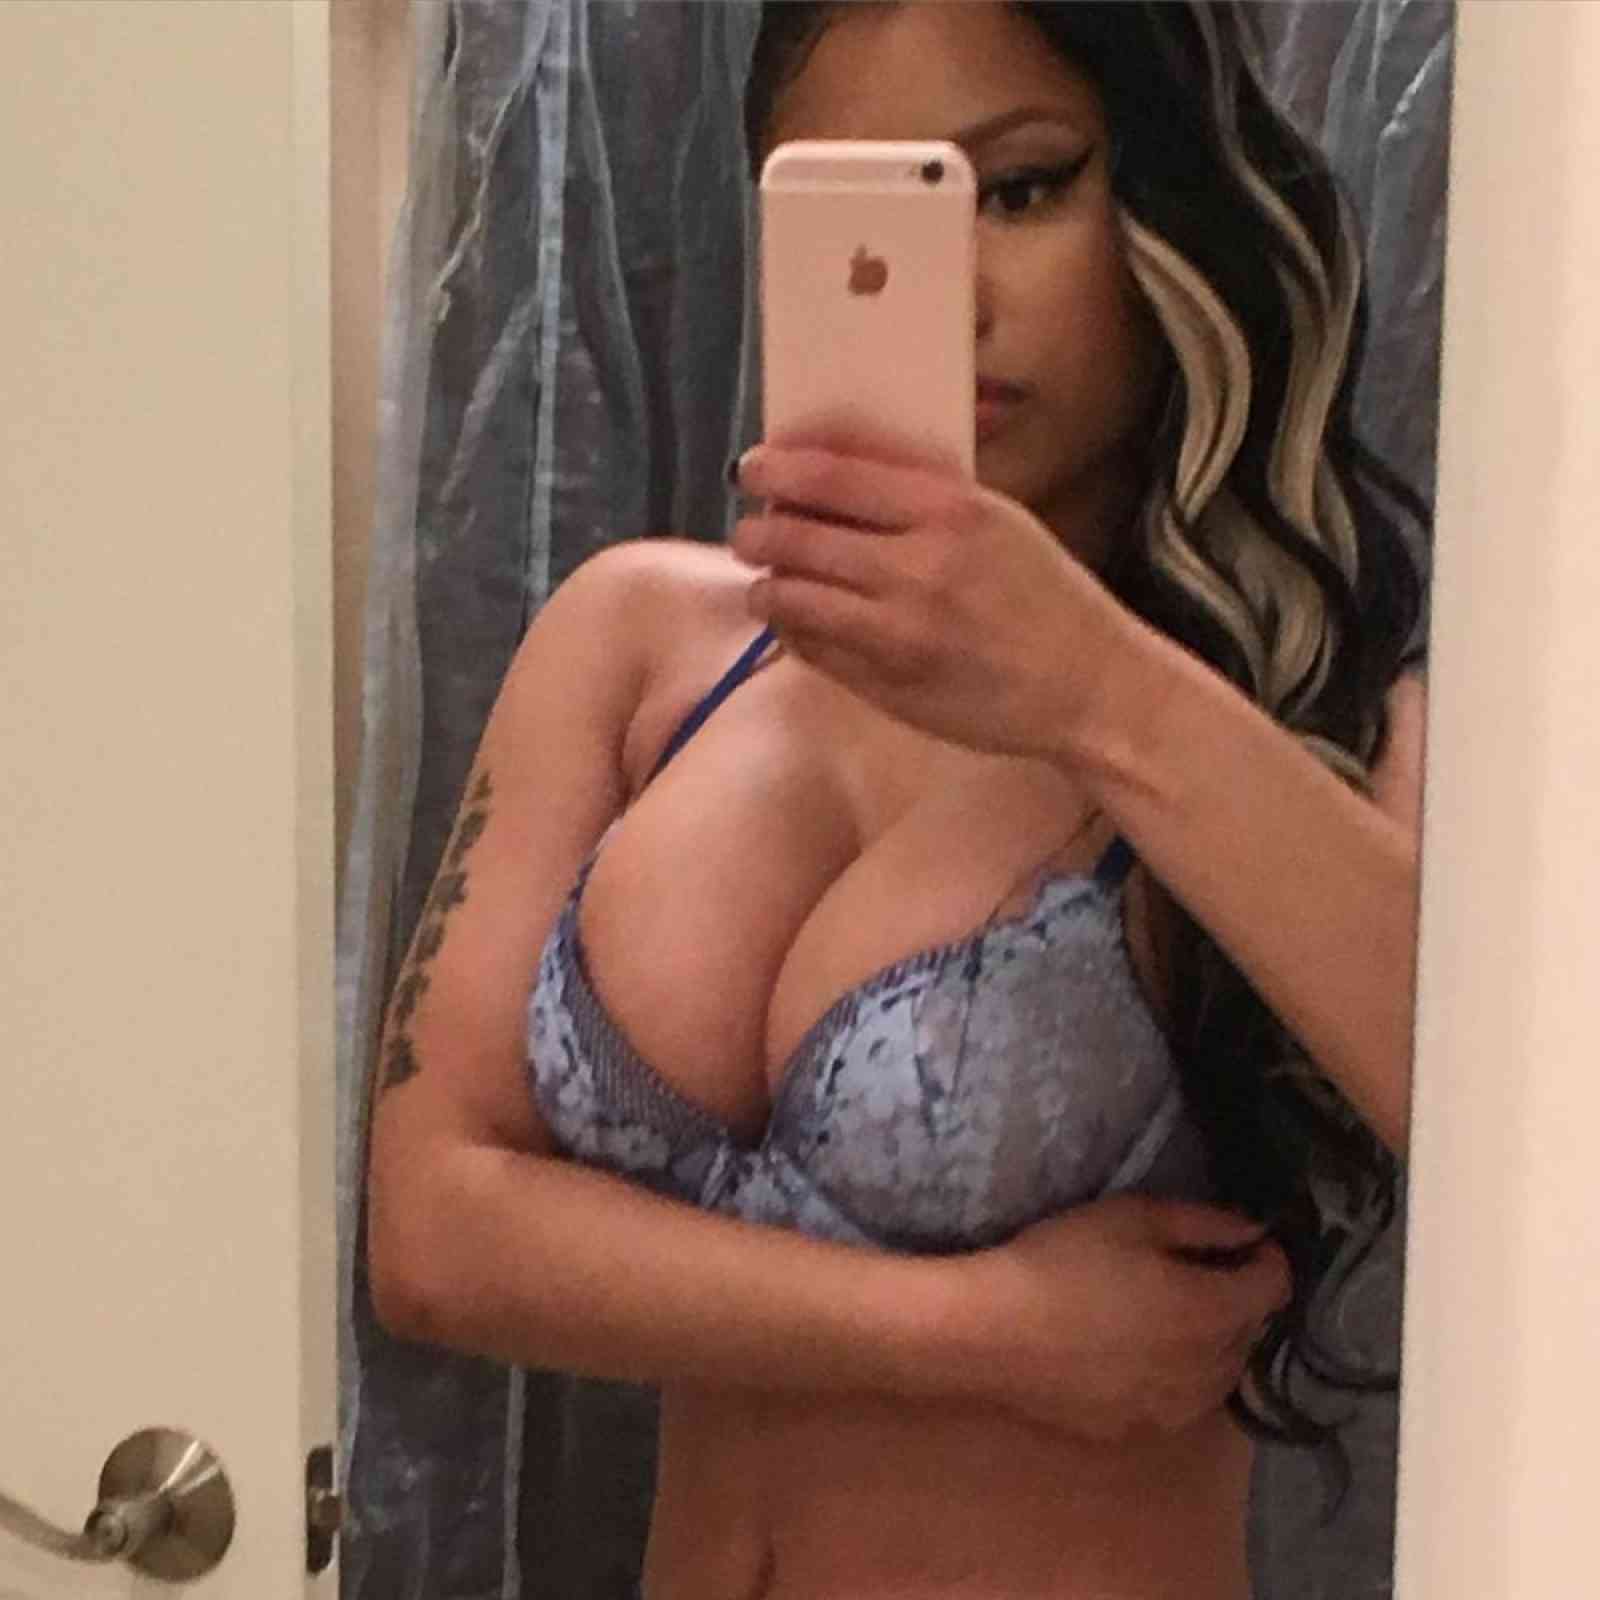 Nicki Minaj taking a bathroom selfi in blue bra